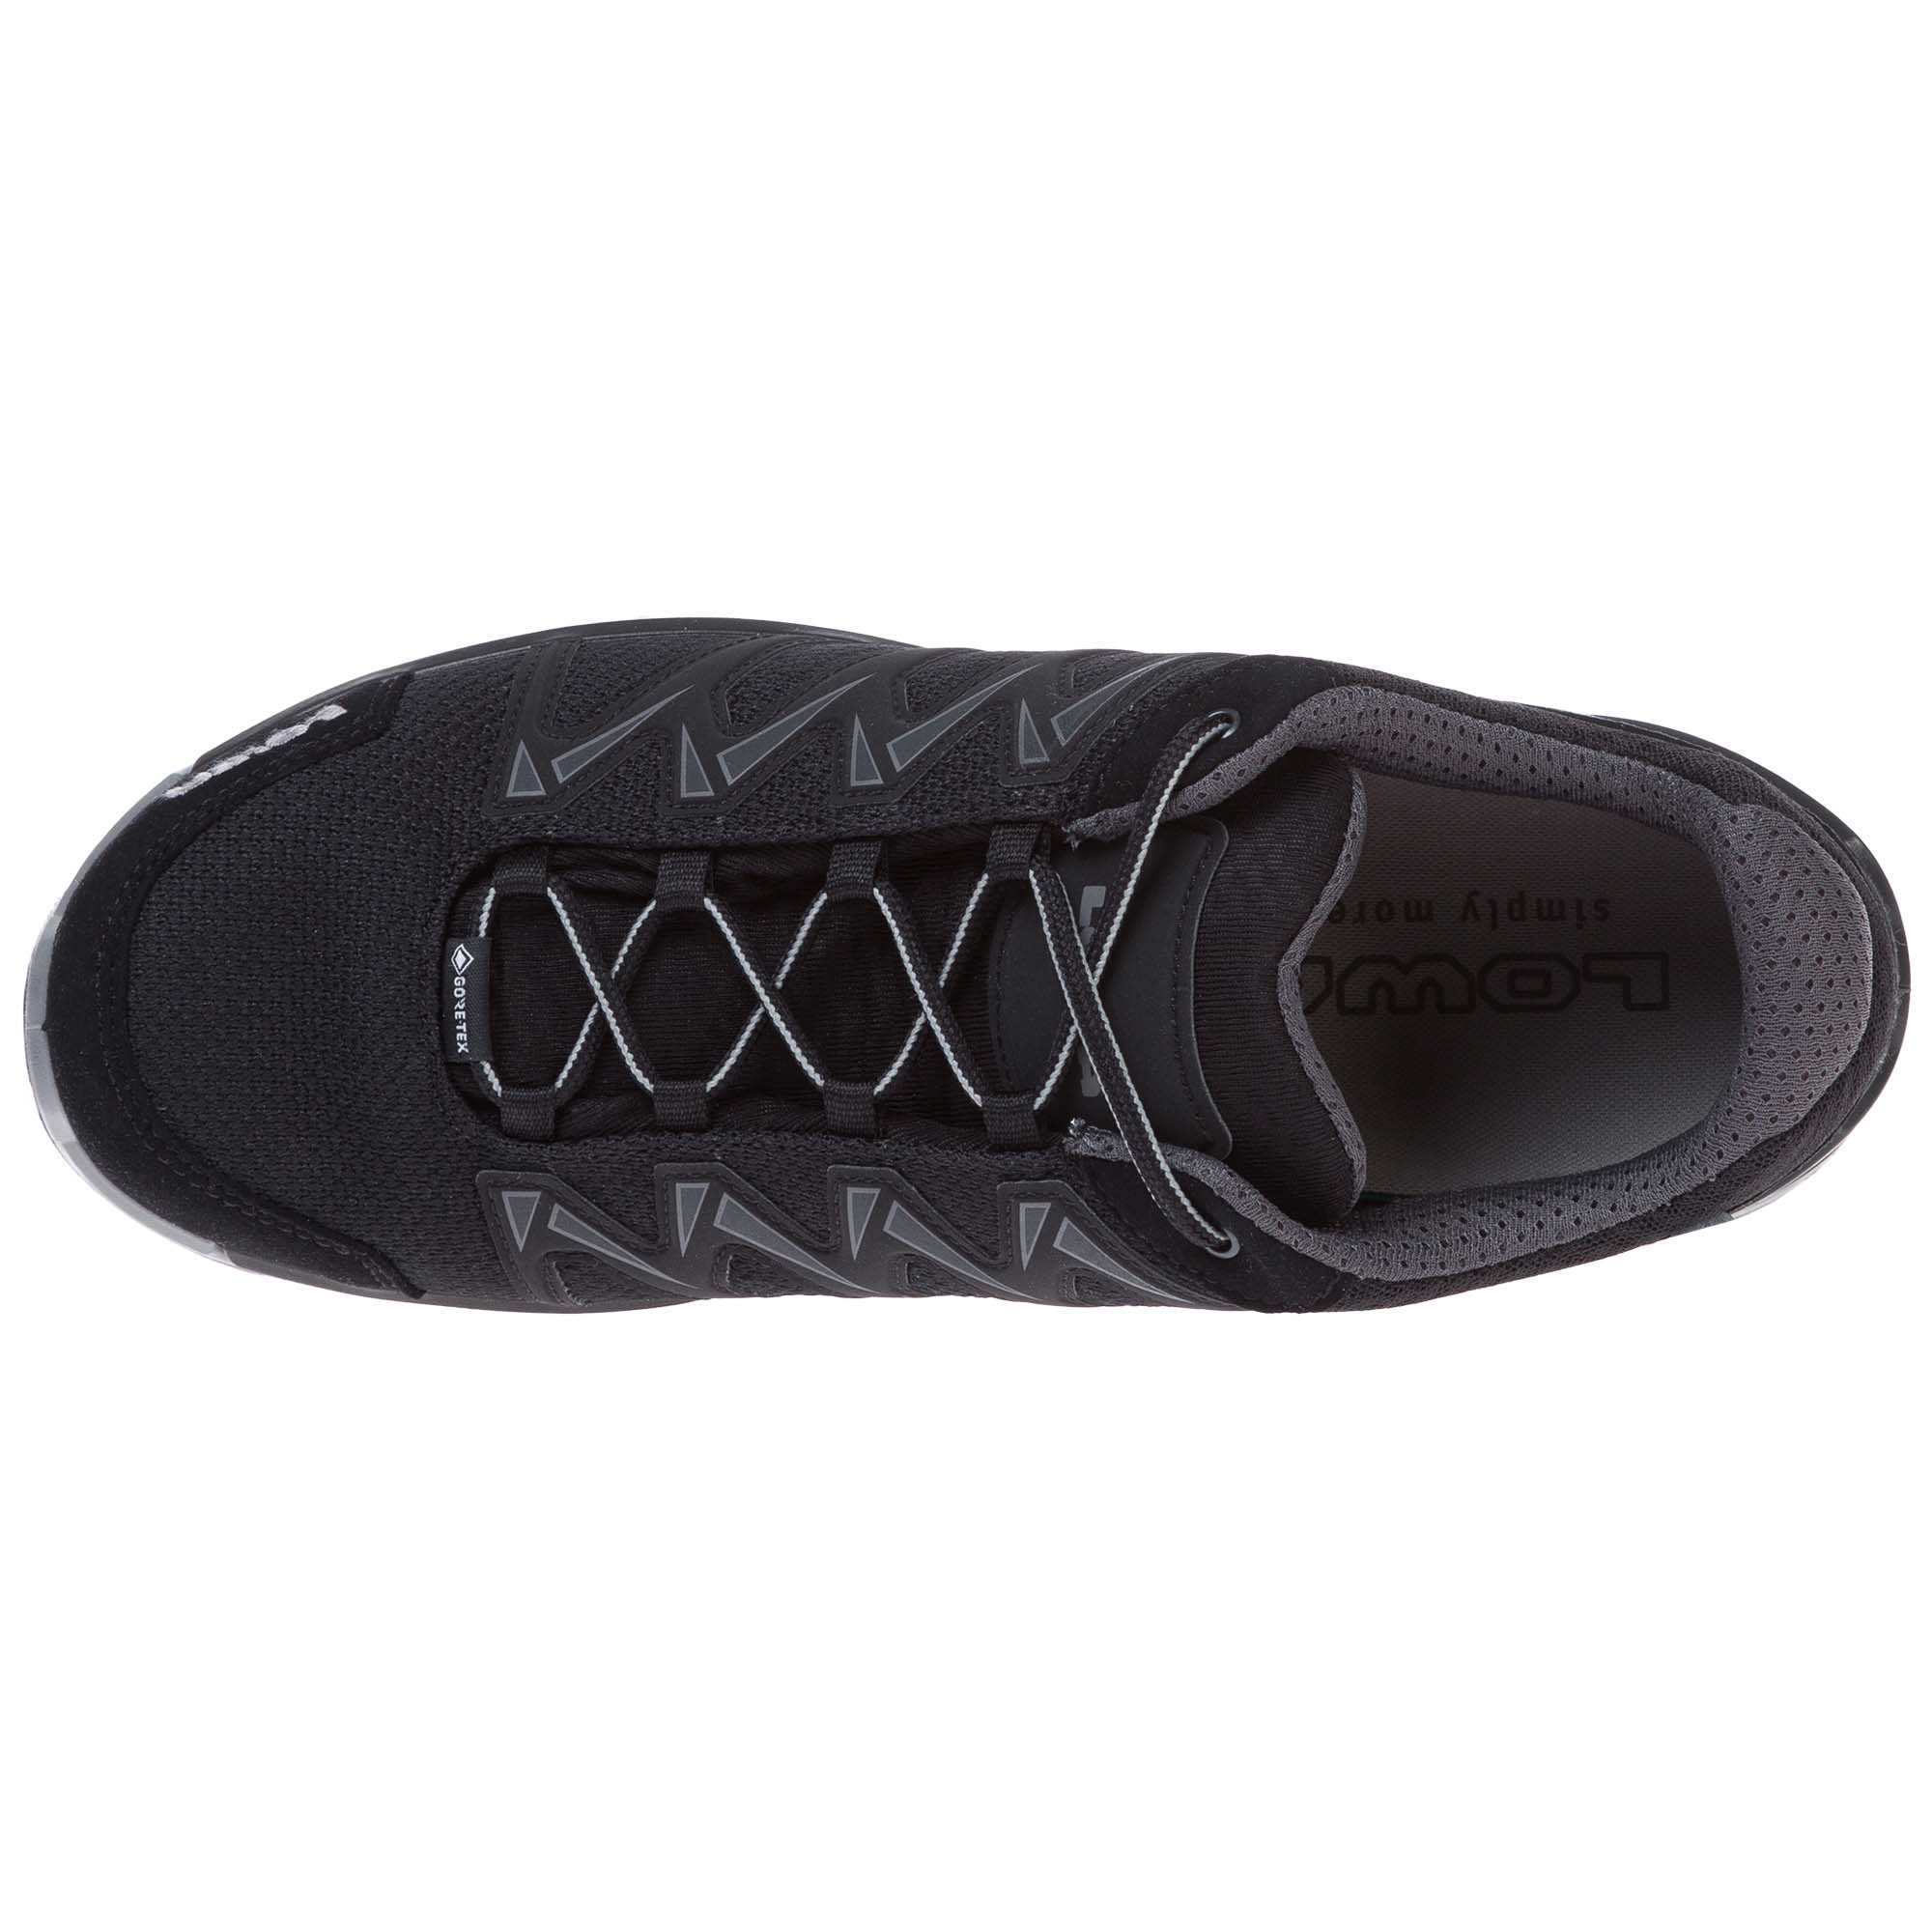 Lowa Innox Pro GTX Lo Men's Walking Shoes